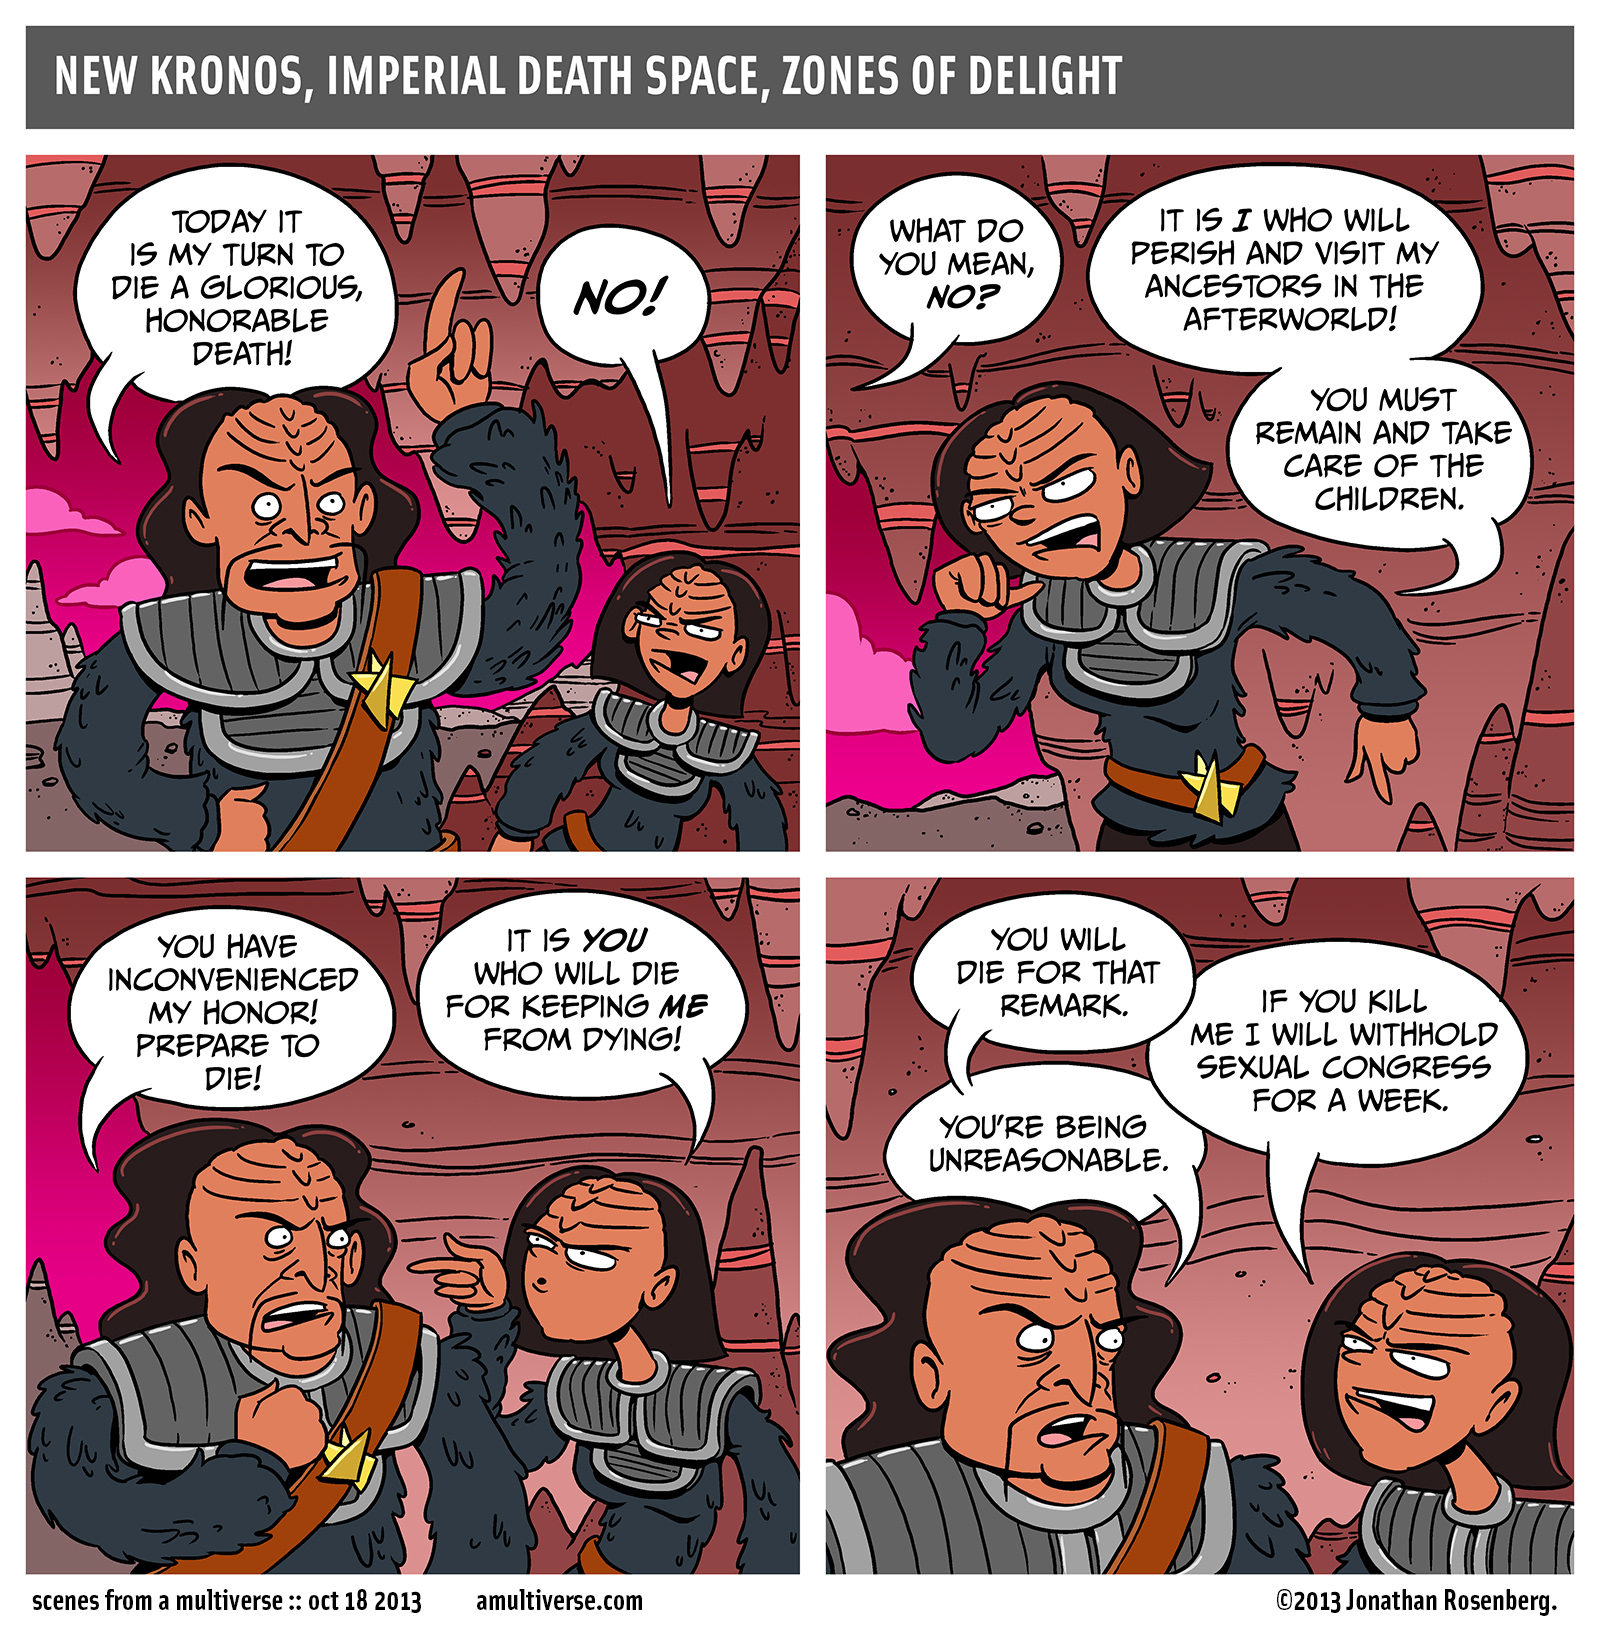 star wars needs more klingons